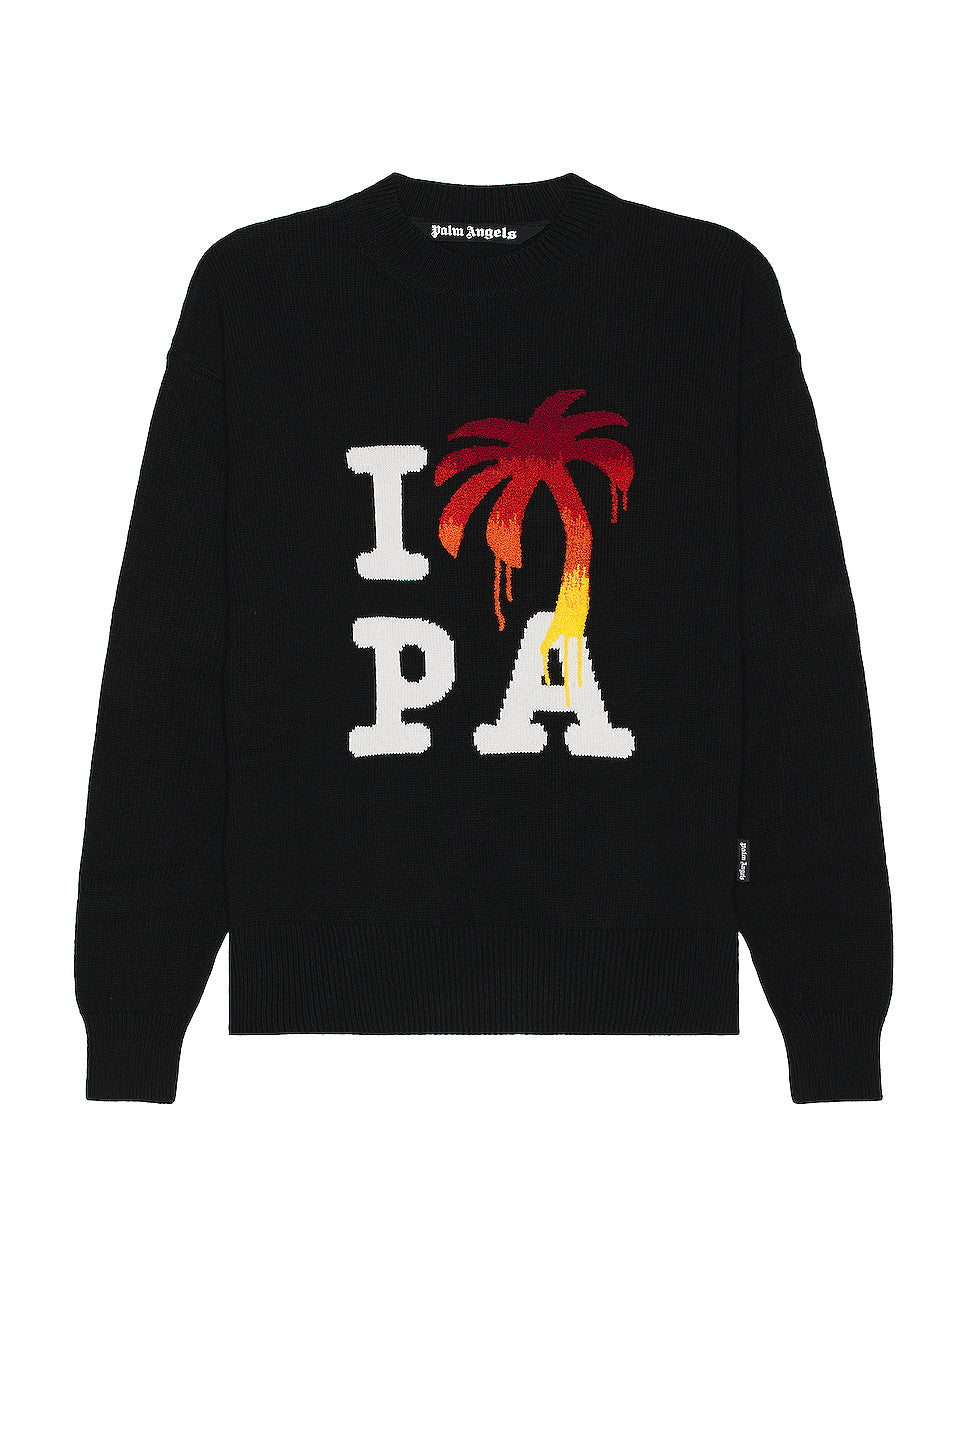 I Love Pa Sweater